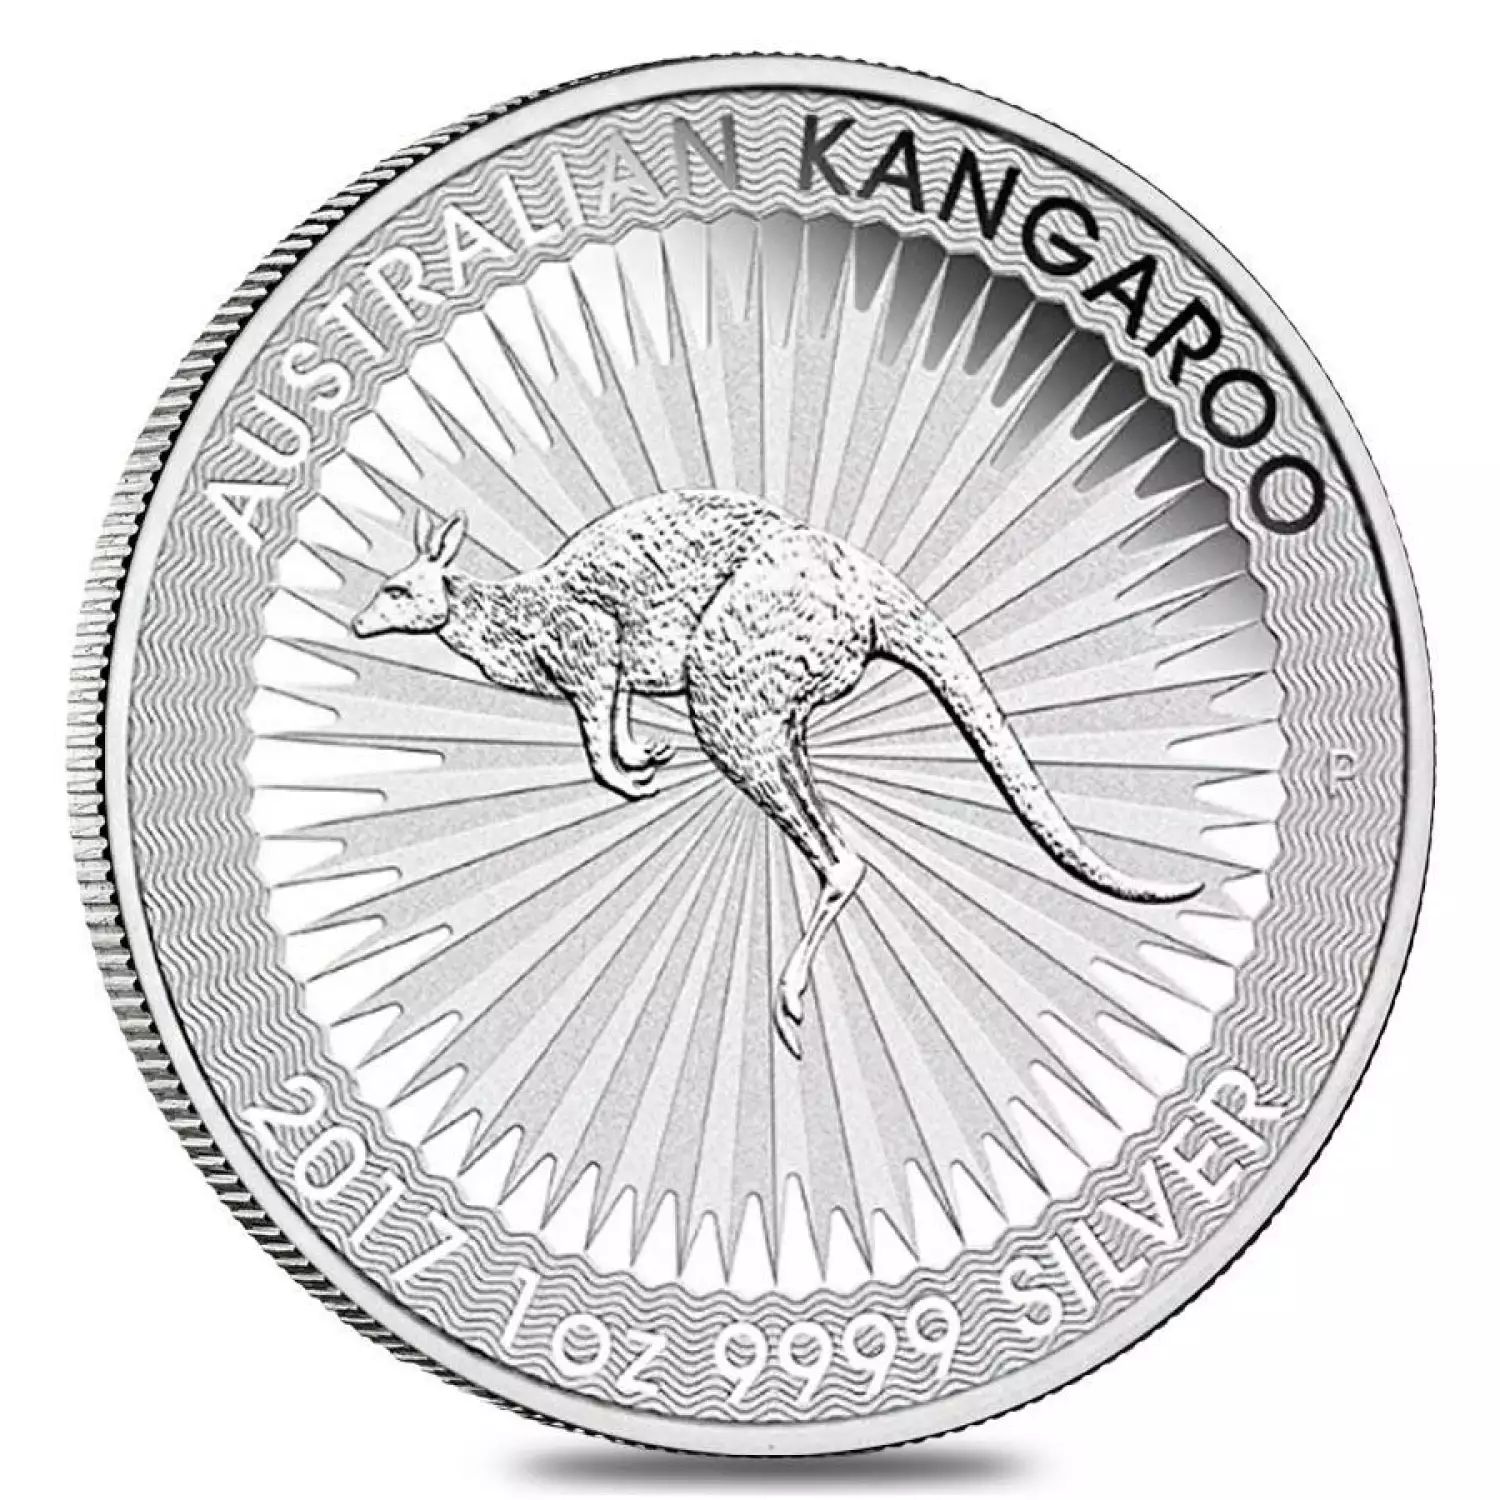 2017 1oz Silver Kangaroo - Royal Australian Mint (2)